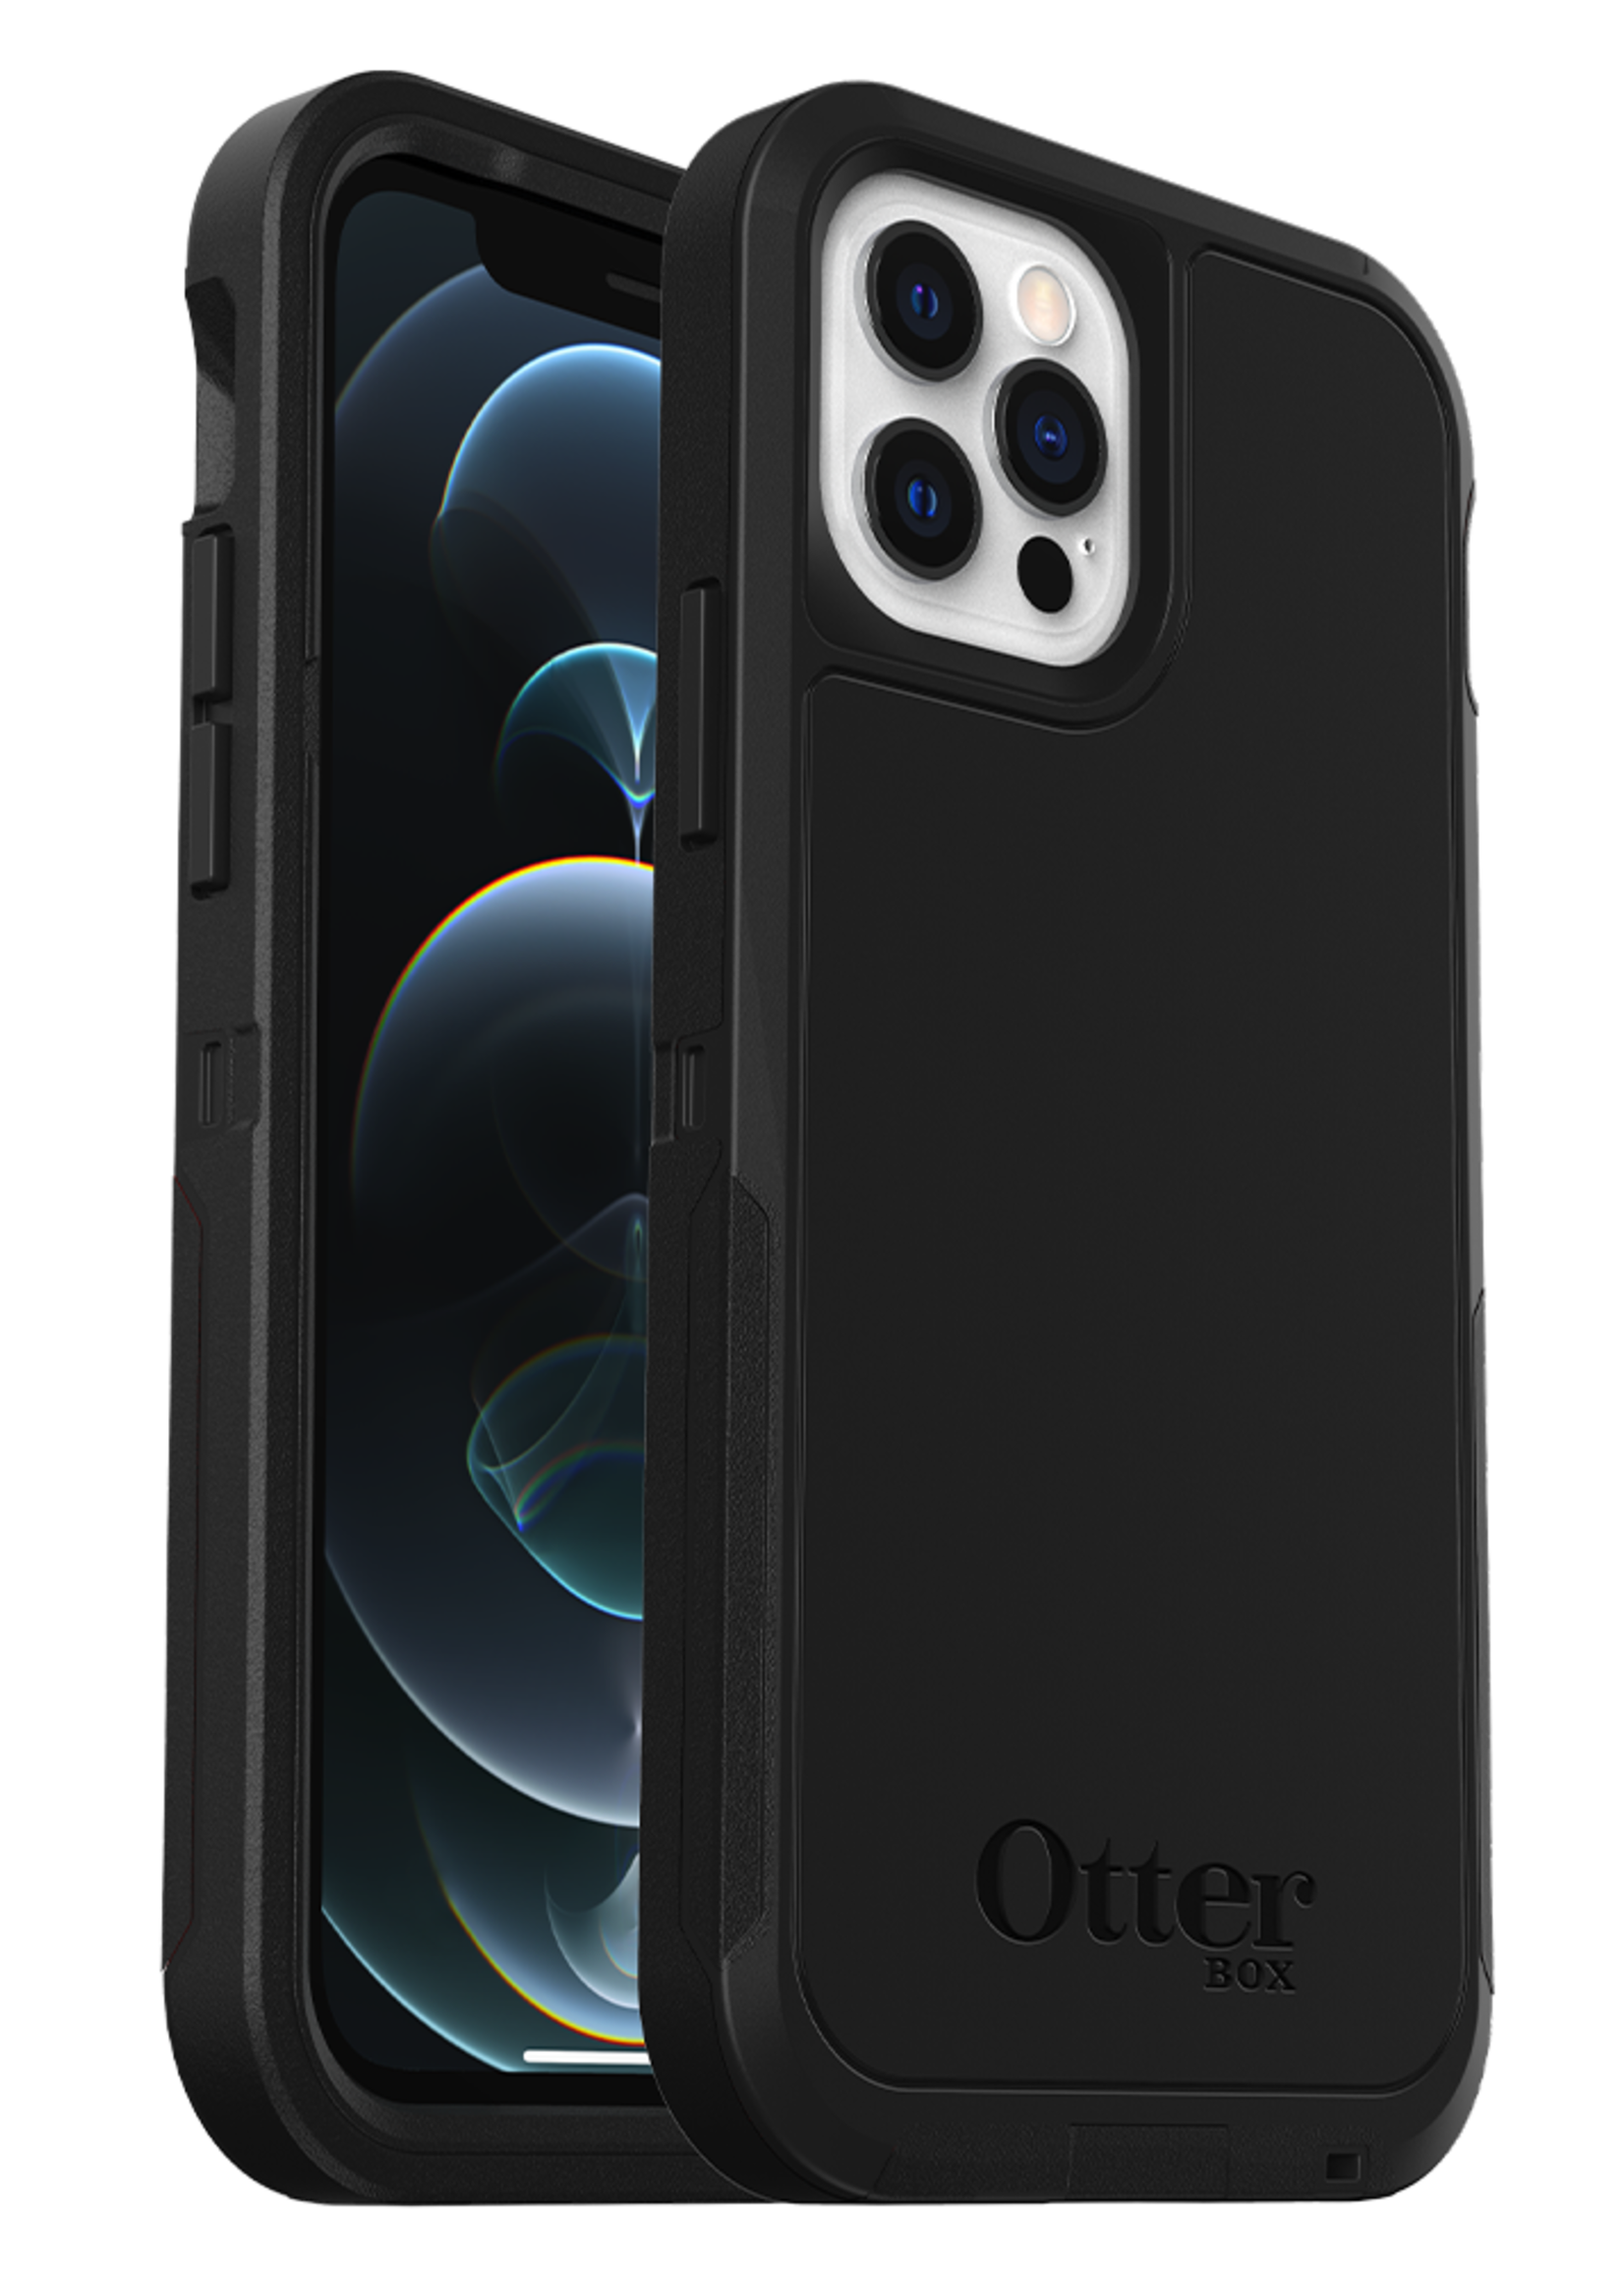 Otterbox OtterBox - Defender Pro XT Case for Apple iPhone 12 / 12 Pro - Black